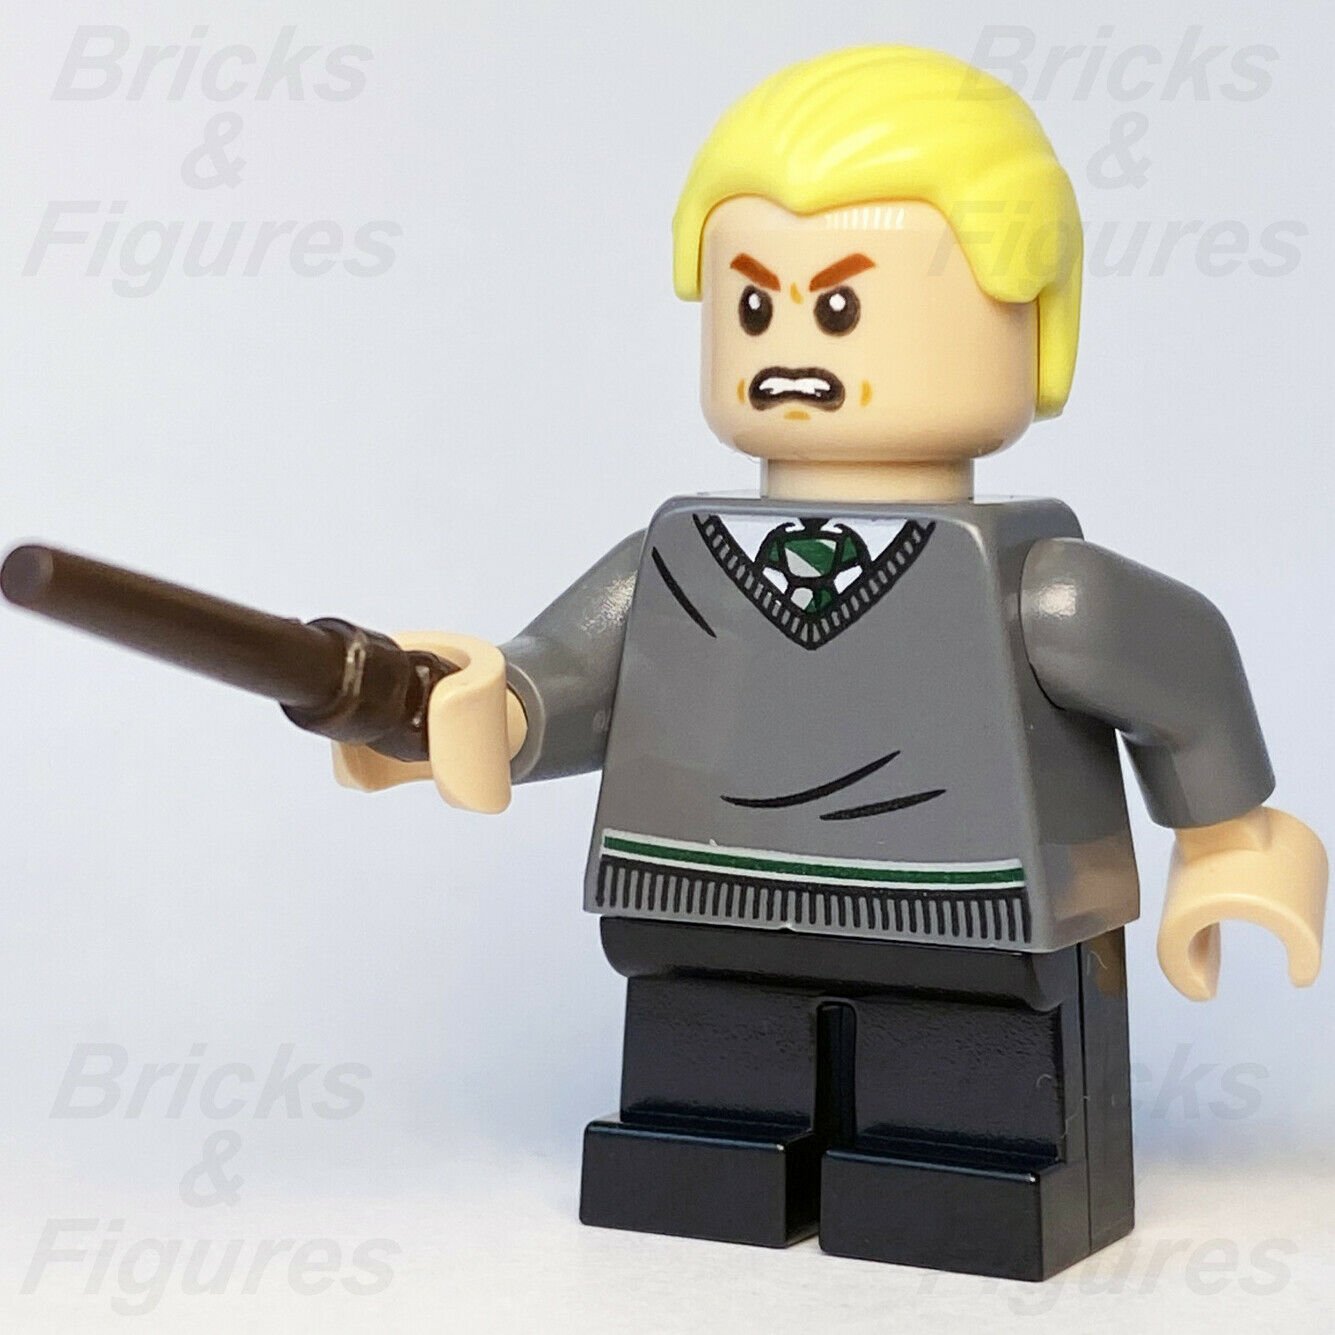 New Harry Potter LEGO Draco Malfoy in Slytherin Sweater Wizard Minifigure 75954 - Bricks & Figures